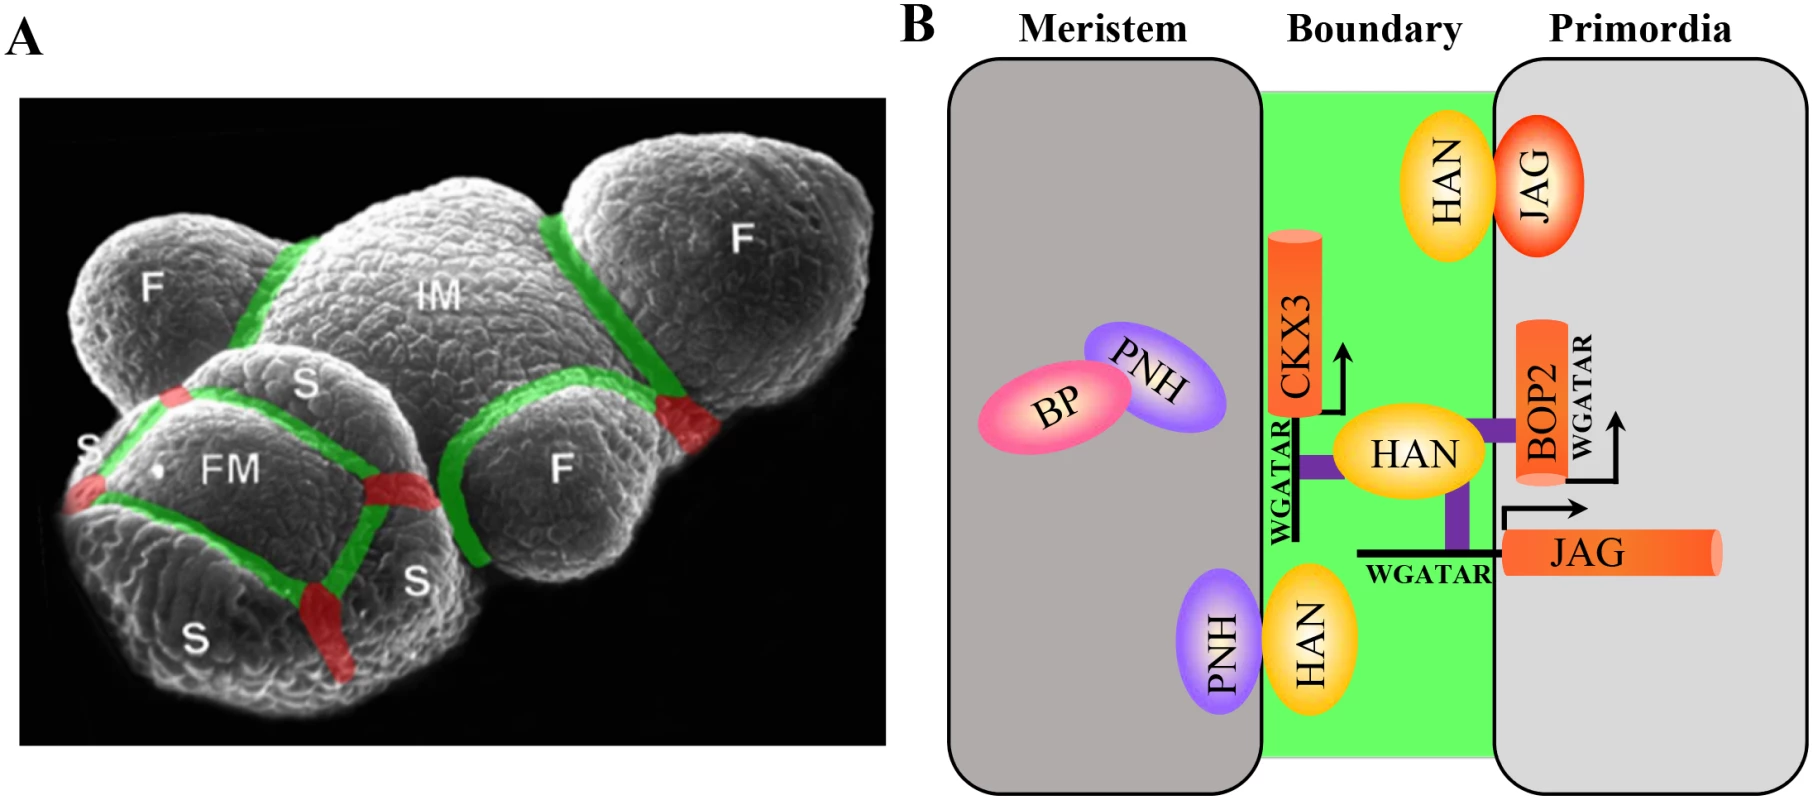 Regulatory interactions between boundary, meristem and floral organ primordia in <i>Arabidopsis</i>.